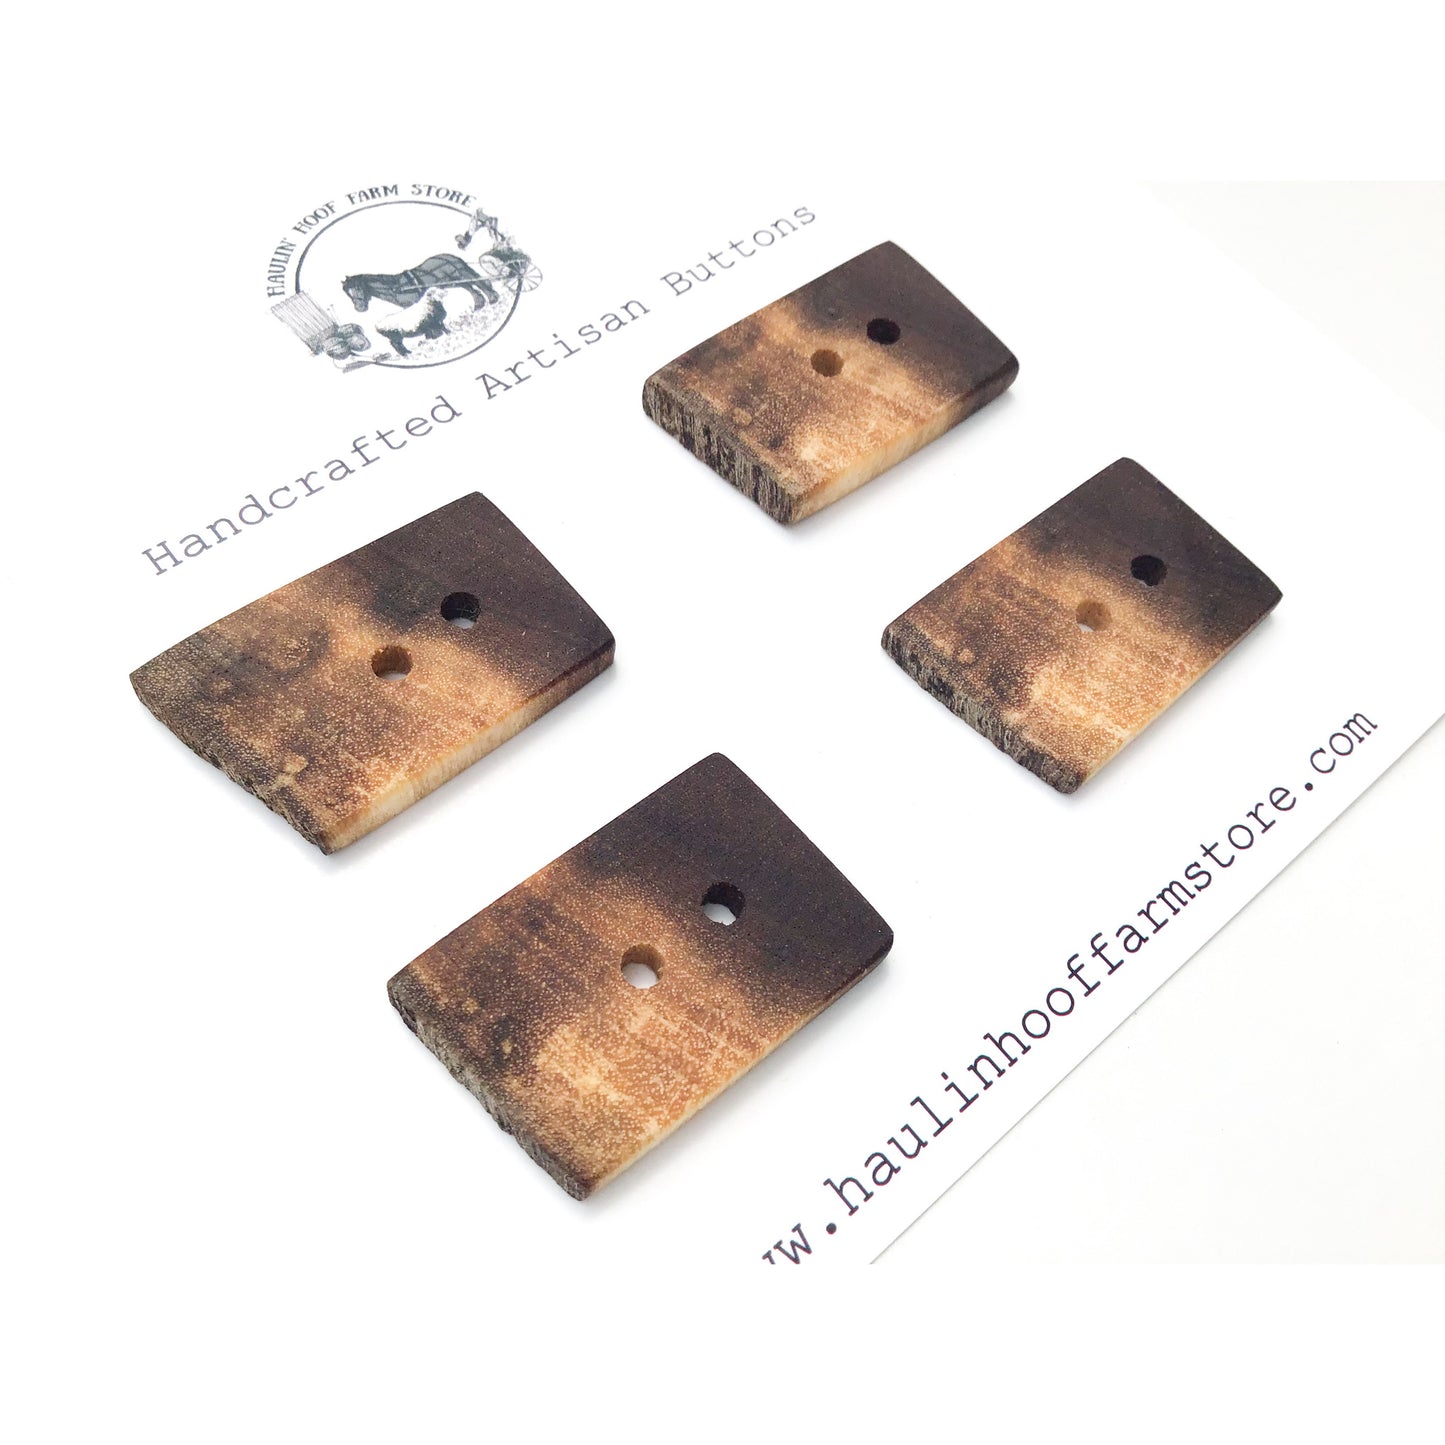 Rustic Black Walnut Wood Buttons - Live Edge Black Walnut Buttons - 13/16" x 1 1/8" - 4 Pack